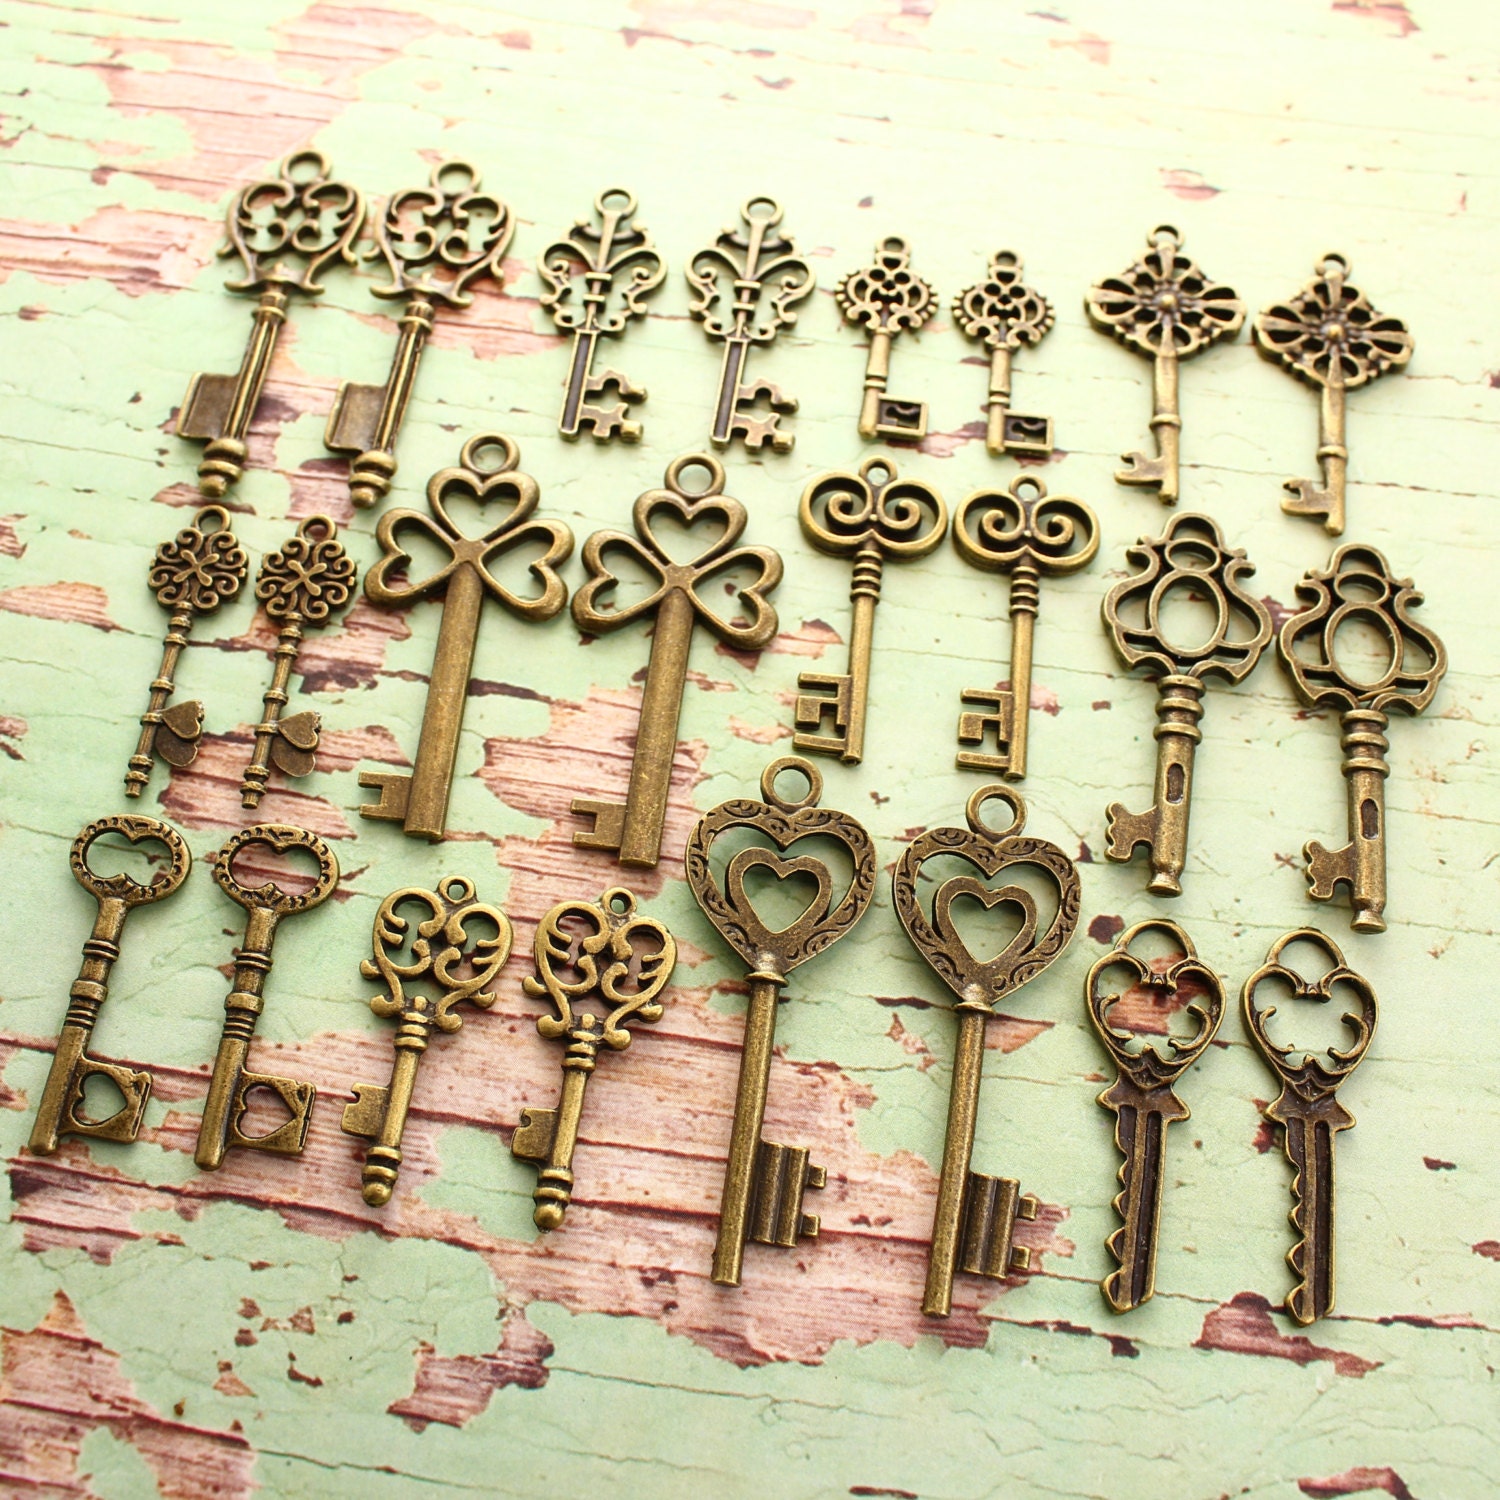 36 Skeleton Key Collection antiqued bronze vintage style